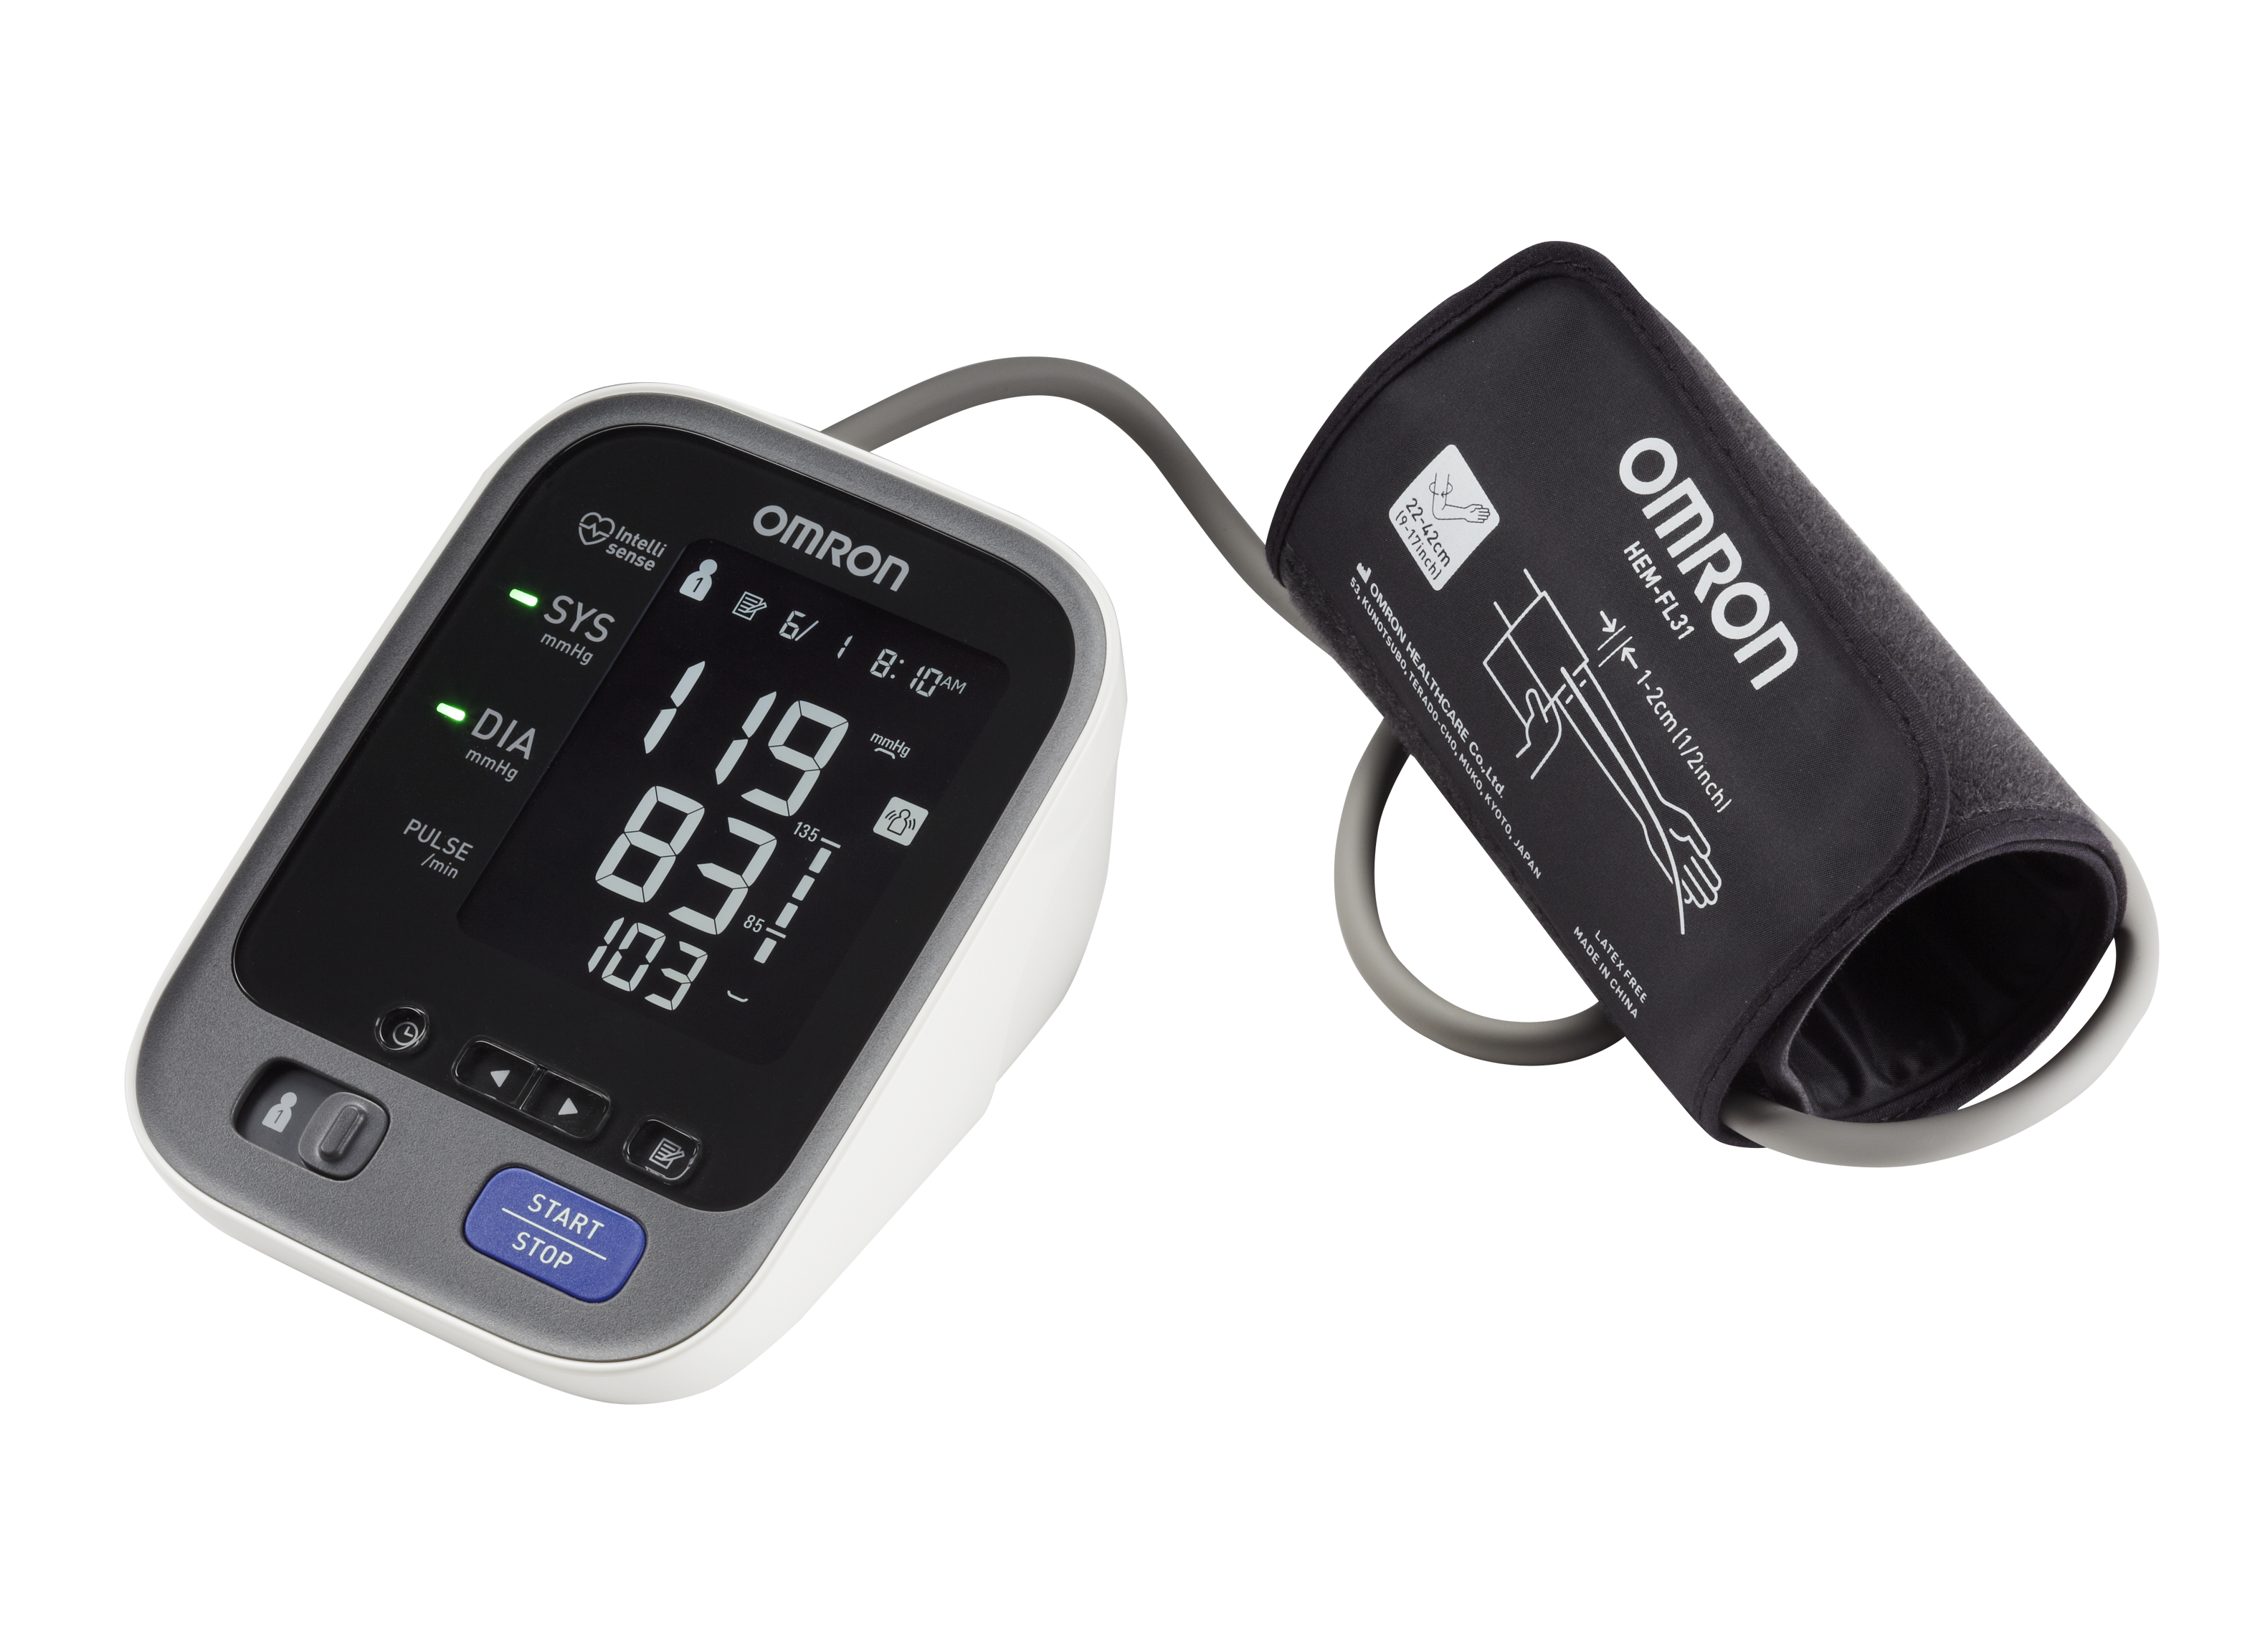 Omron 10 Series BP786N Wireless Arm Blood Pressure Monitor Tested